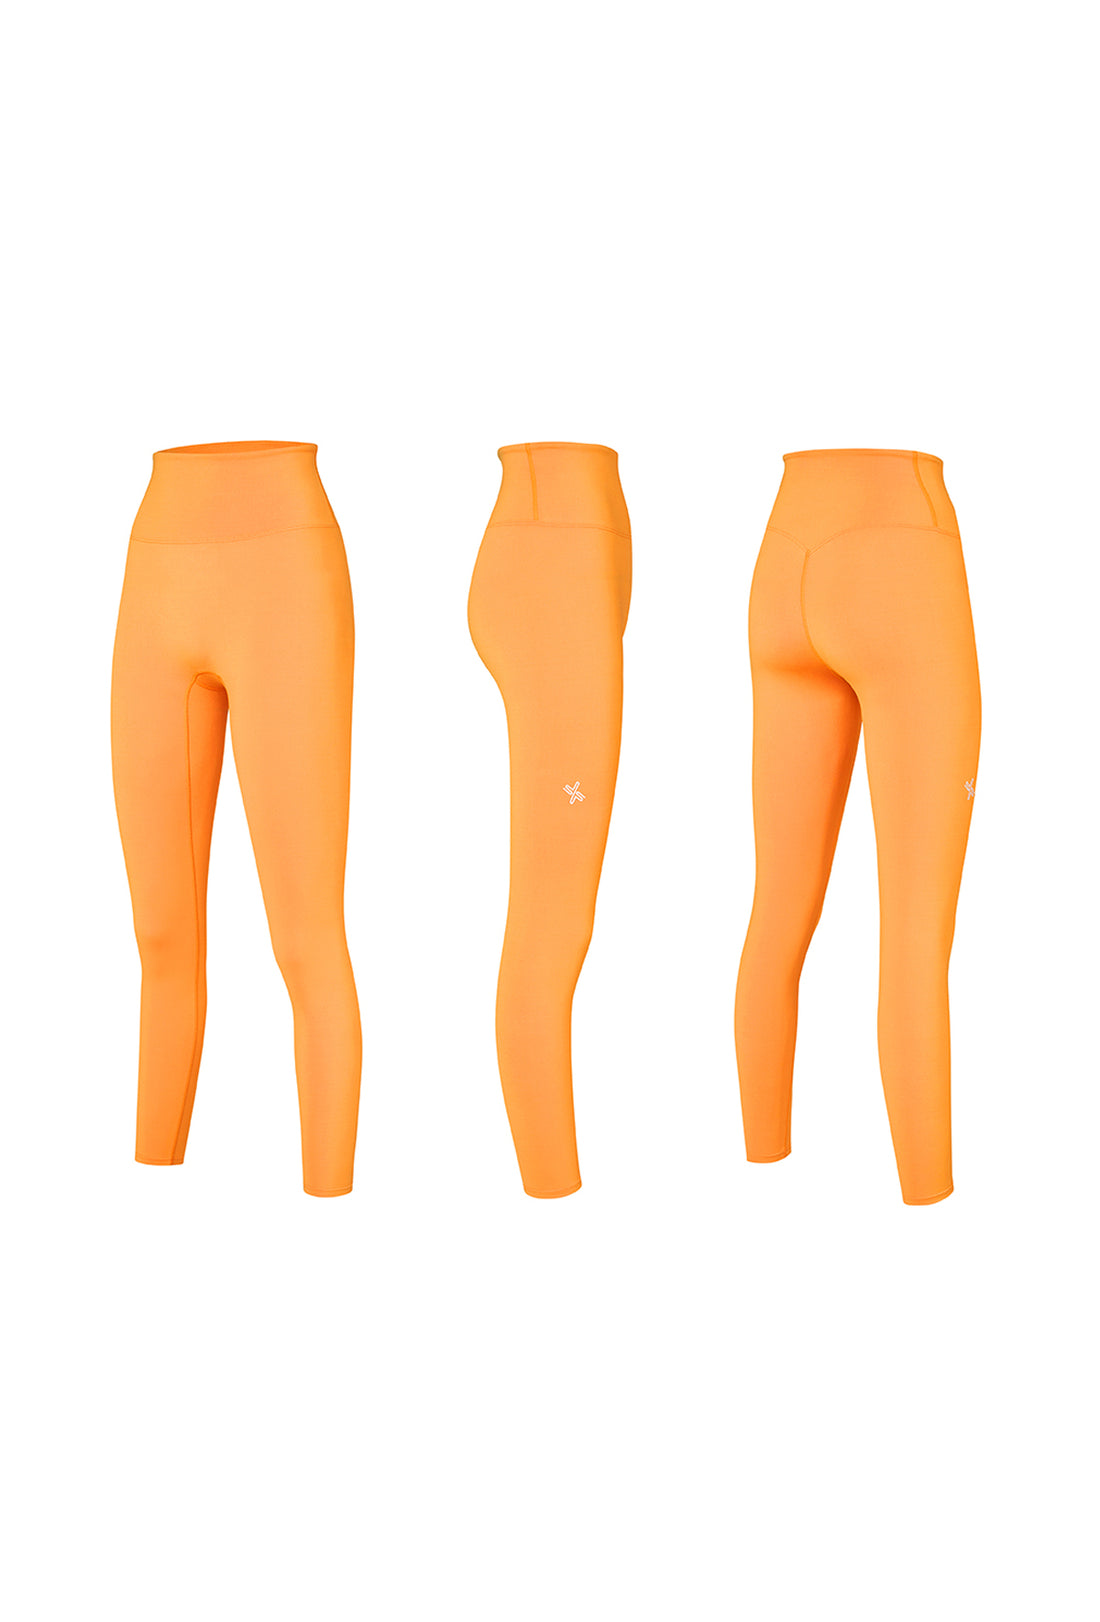 XEXYMIX XELLA™ Intention Leggings - Yellow Orange